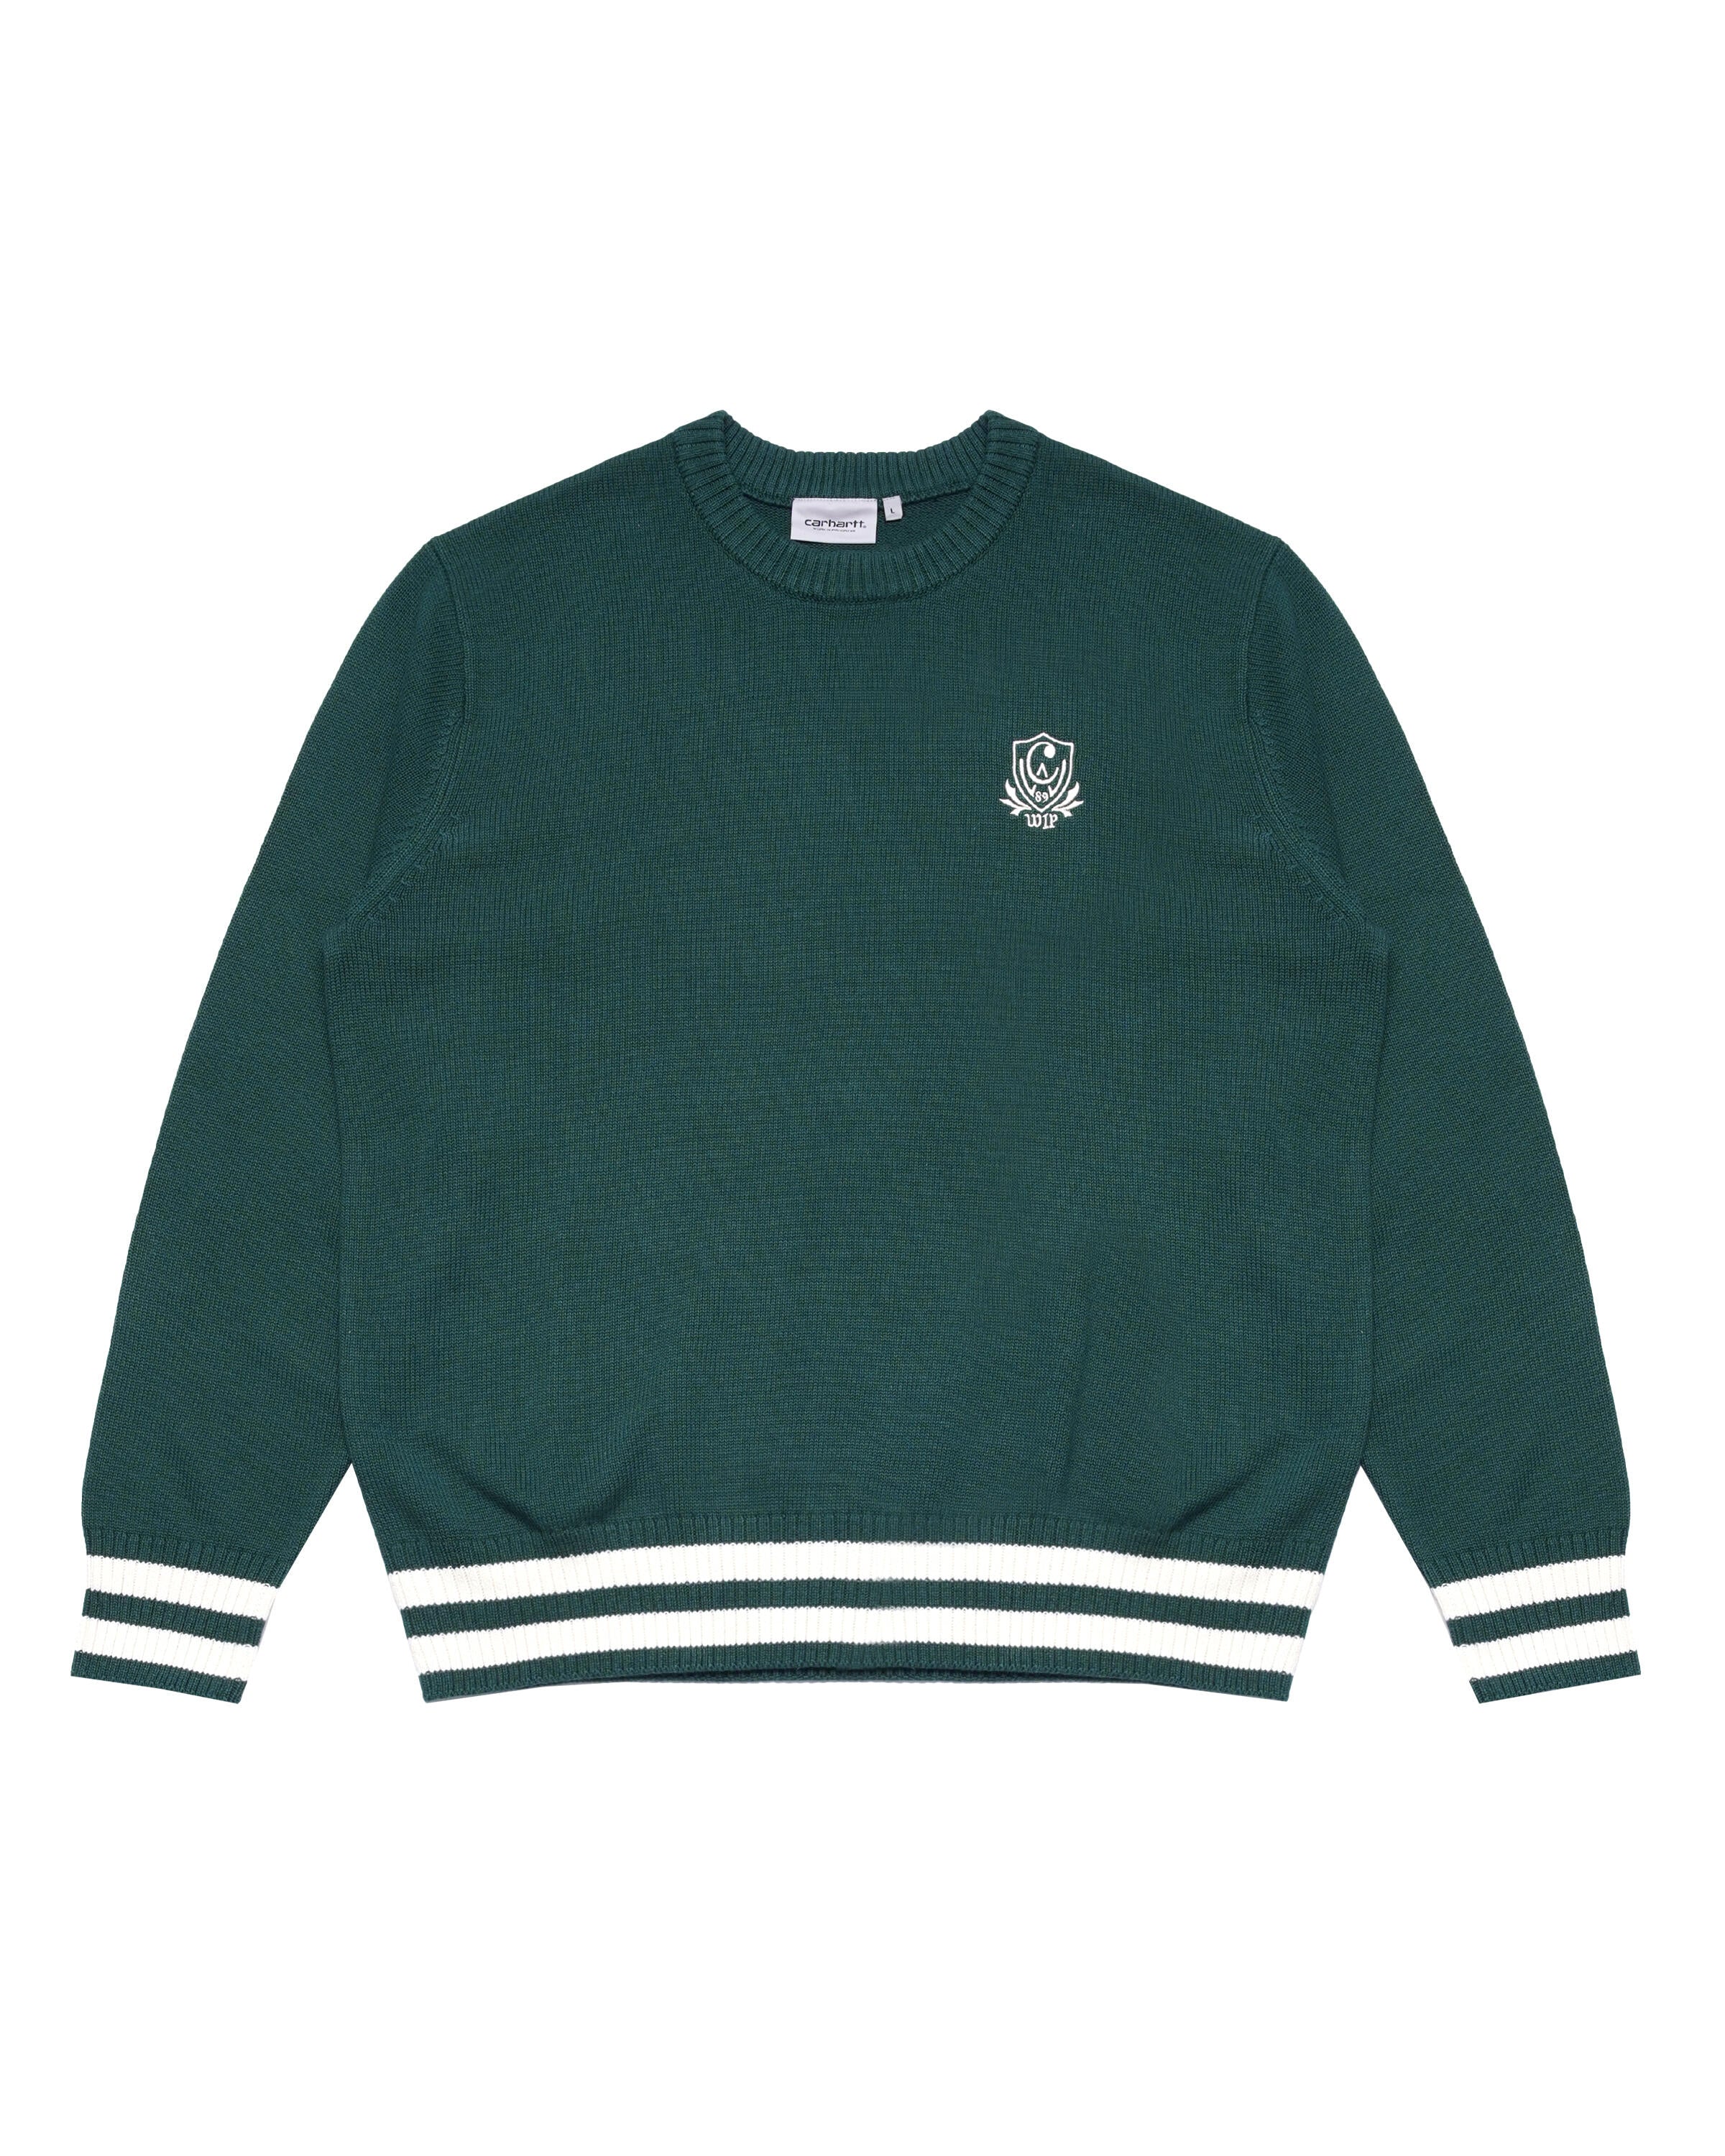 Carhartt WIP Cambridge Sweater